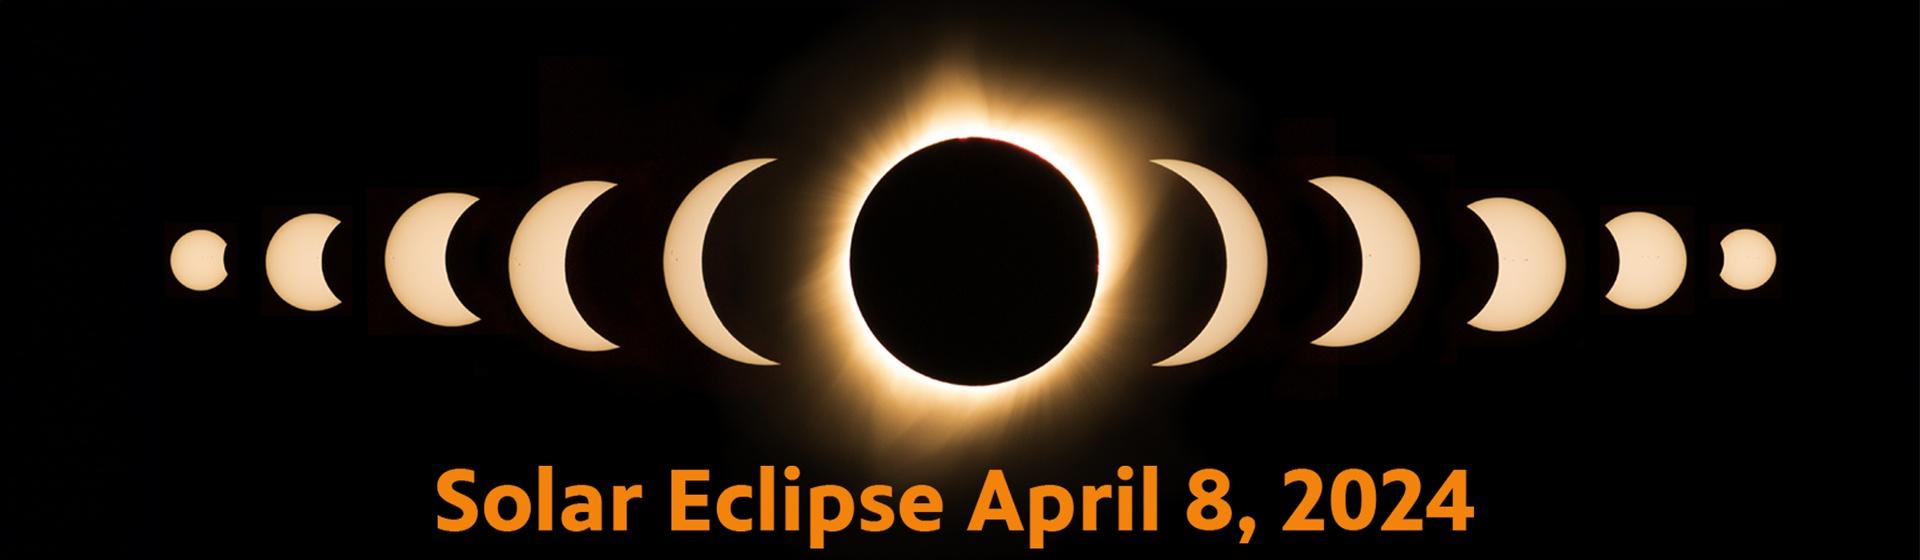 Composit eimage of a total solar eclipse with text "Solar Eclipse April 8, 2024"